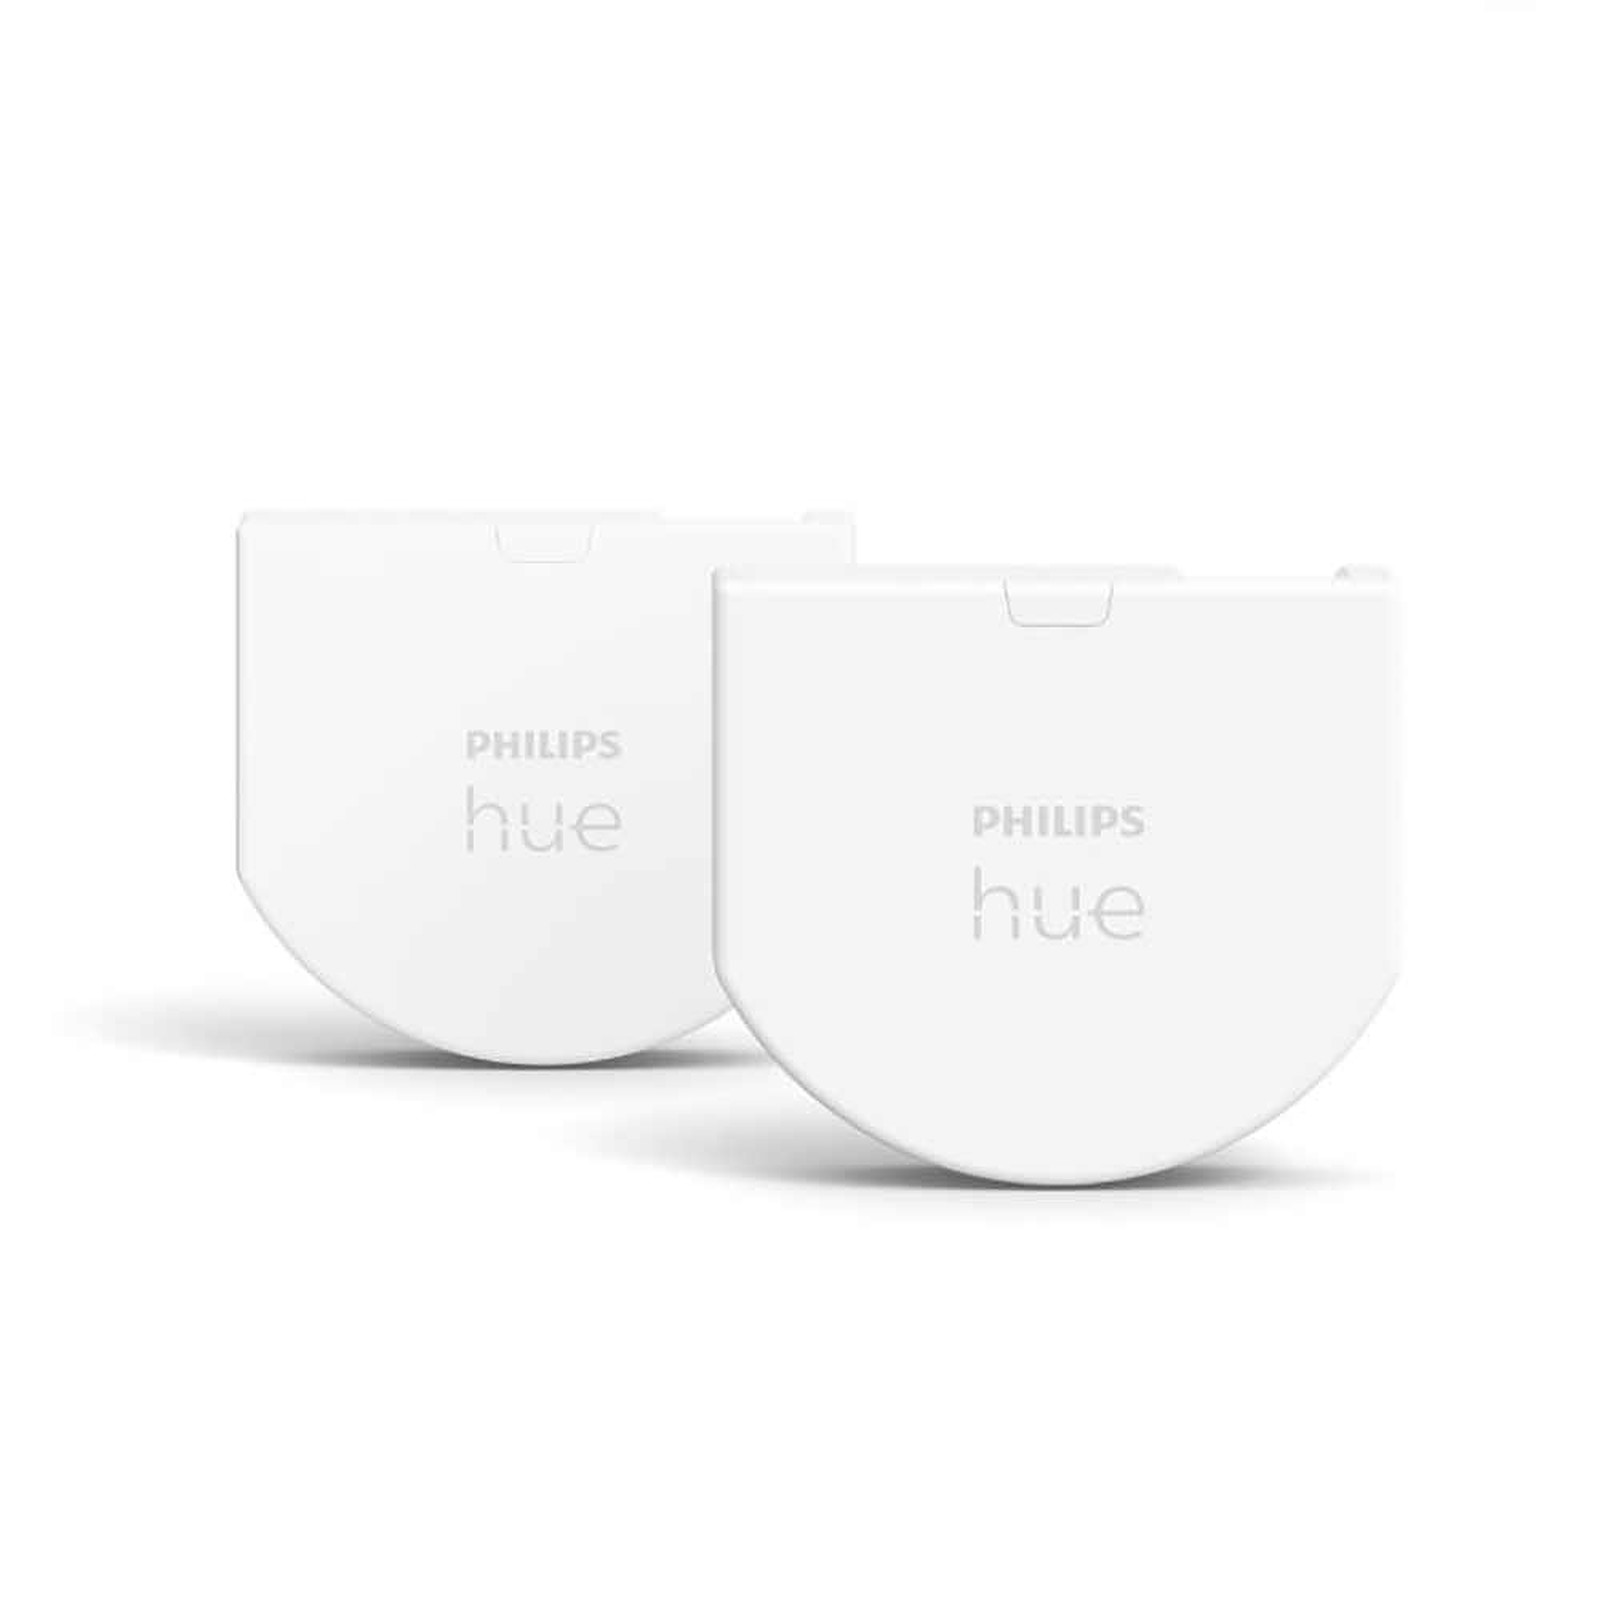 Philips Hue Wall Switch Module x2 - Accessoire eclairage connecte Philips